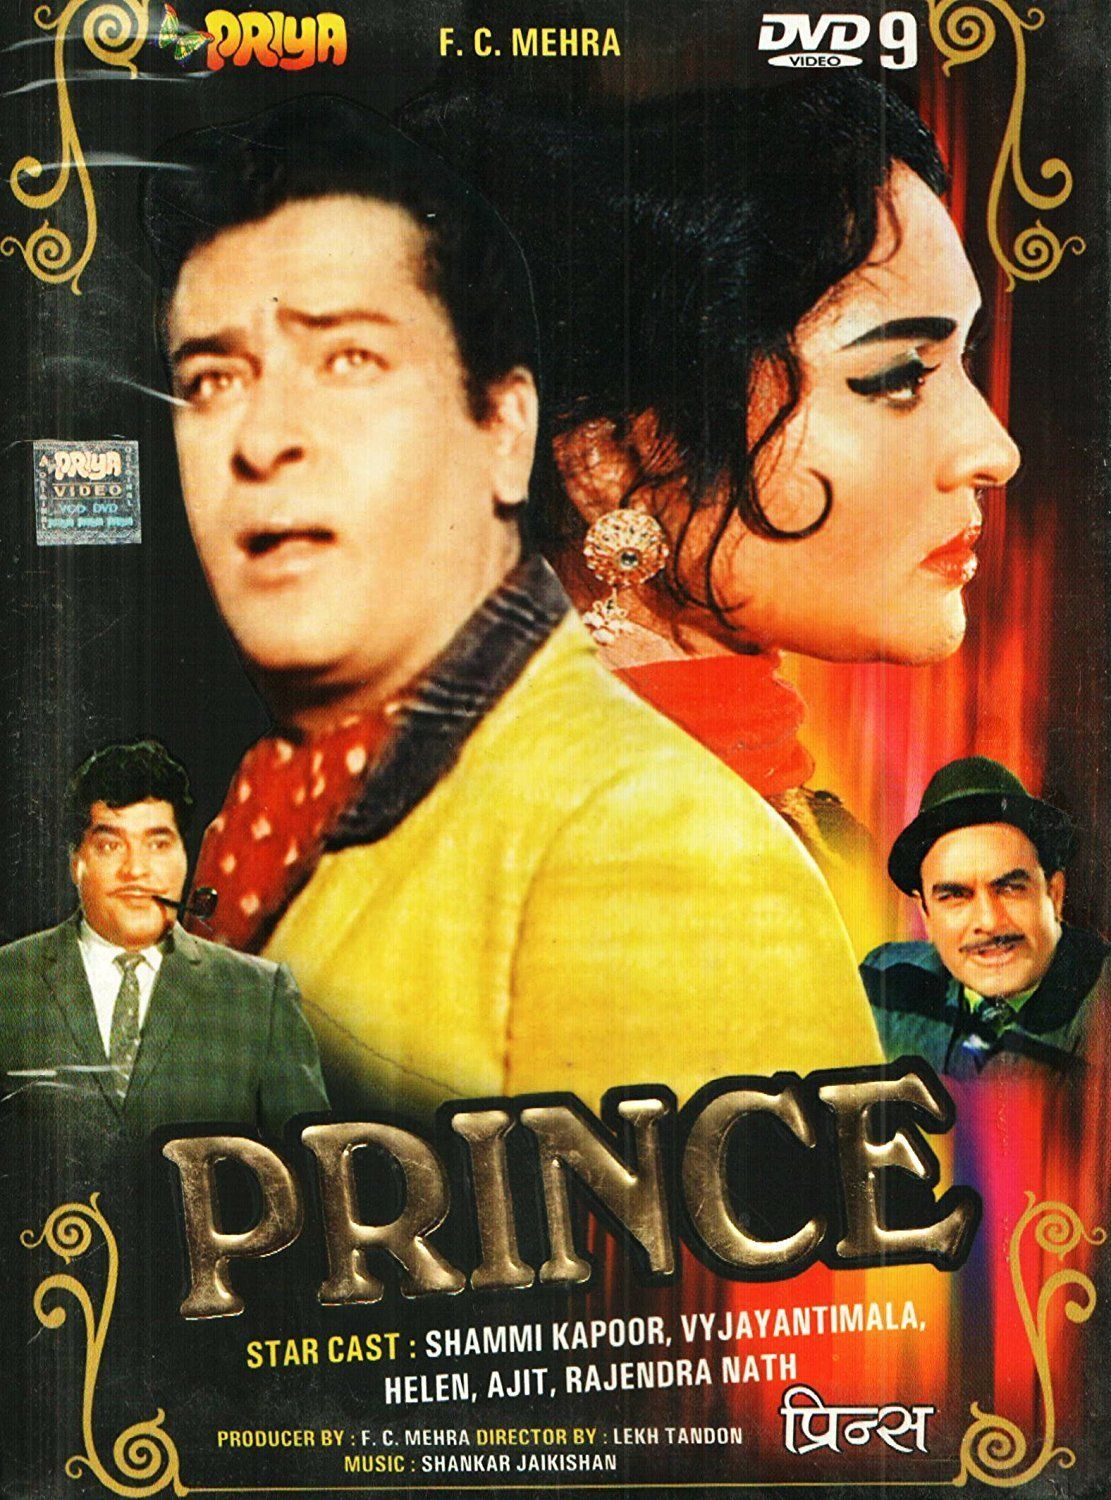 Prince 1969 9204 Poster.jpg